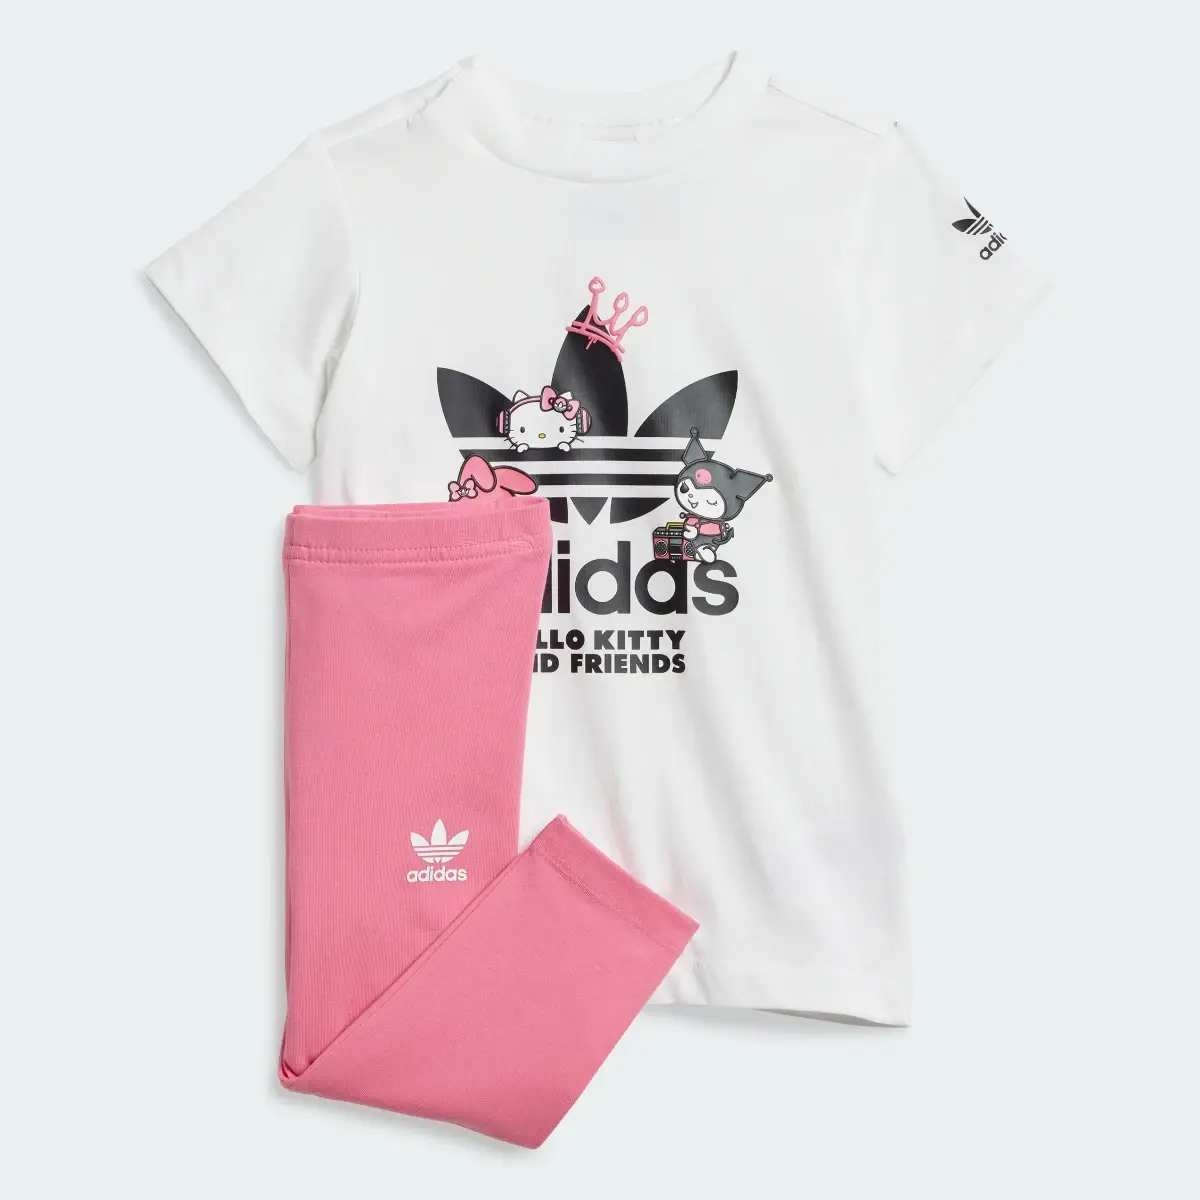 Adidas Originals x Hello Kitty Elbise Tayt Takımı. 2